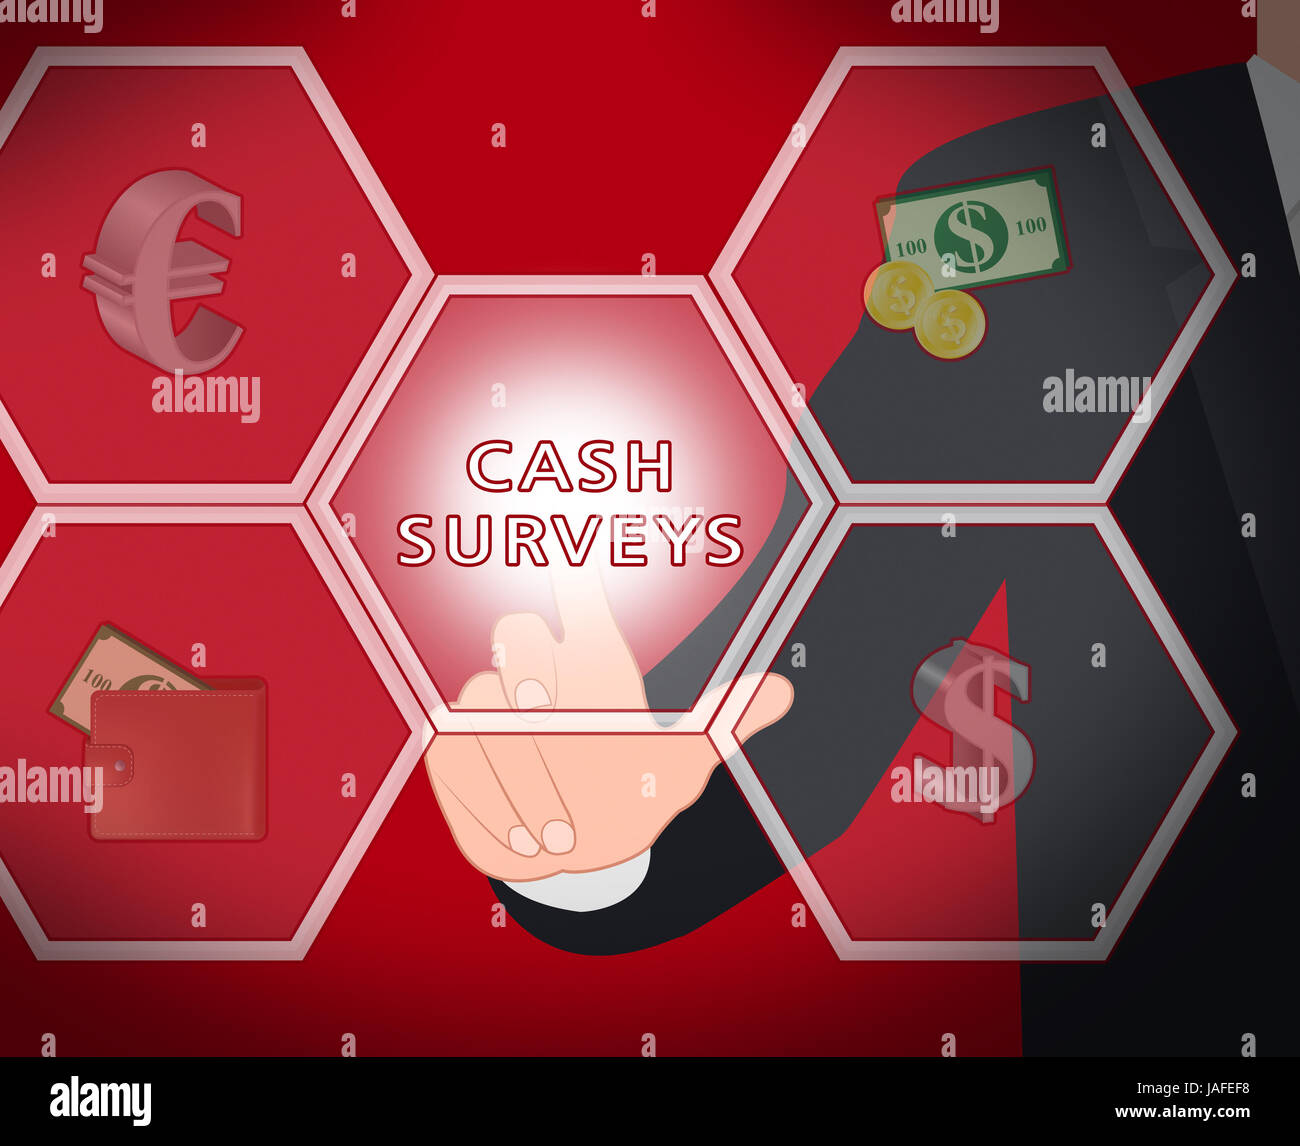 Cash Surveys Icons Displays Paid Survey 3d Illustration Stock Photo